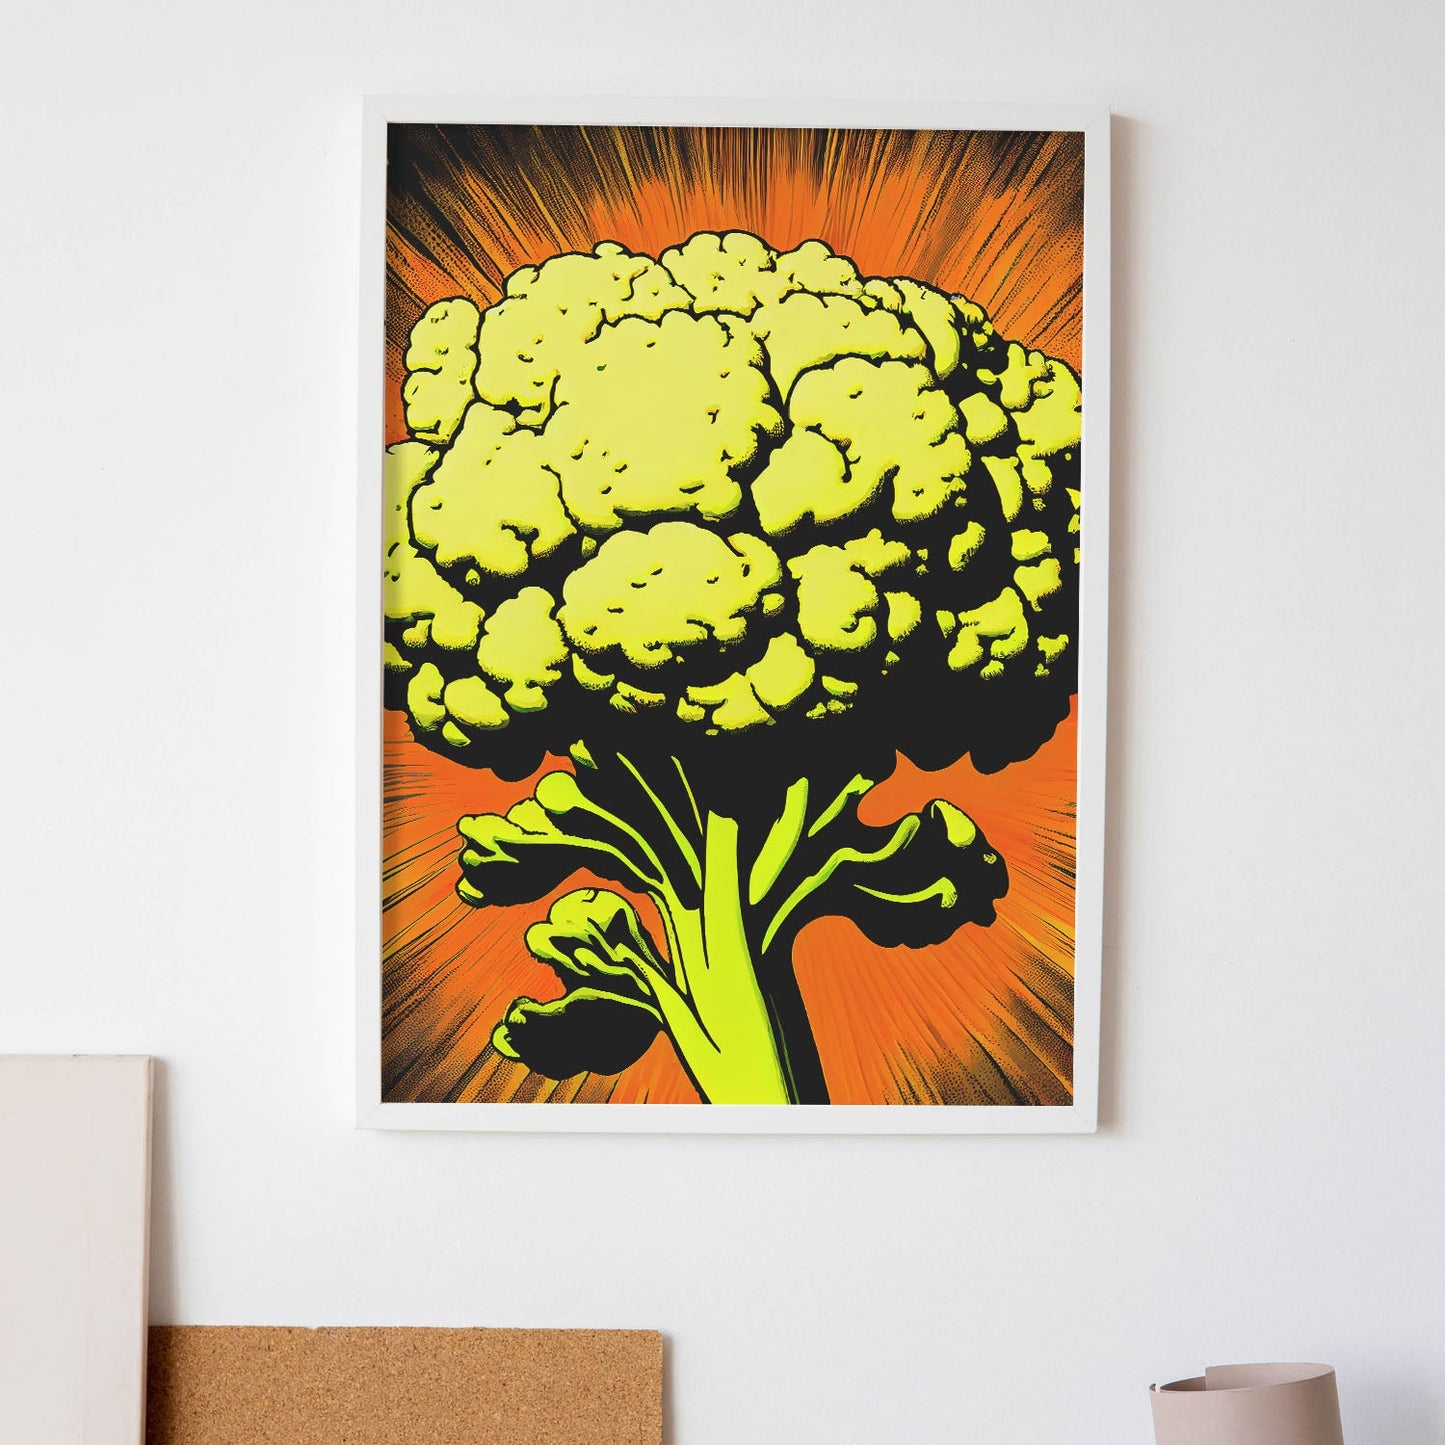 Nacnic Cauliflower Pop Art. Aesthetic Wall Art Prints for Bedroom or Living Room Design.